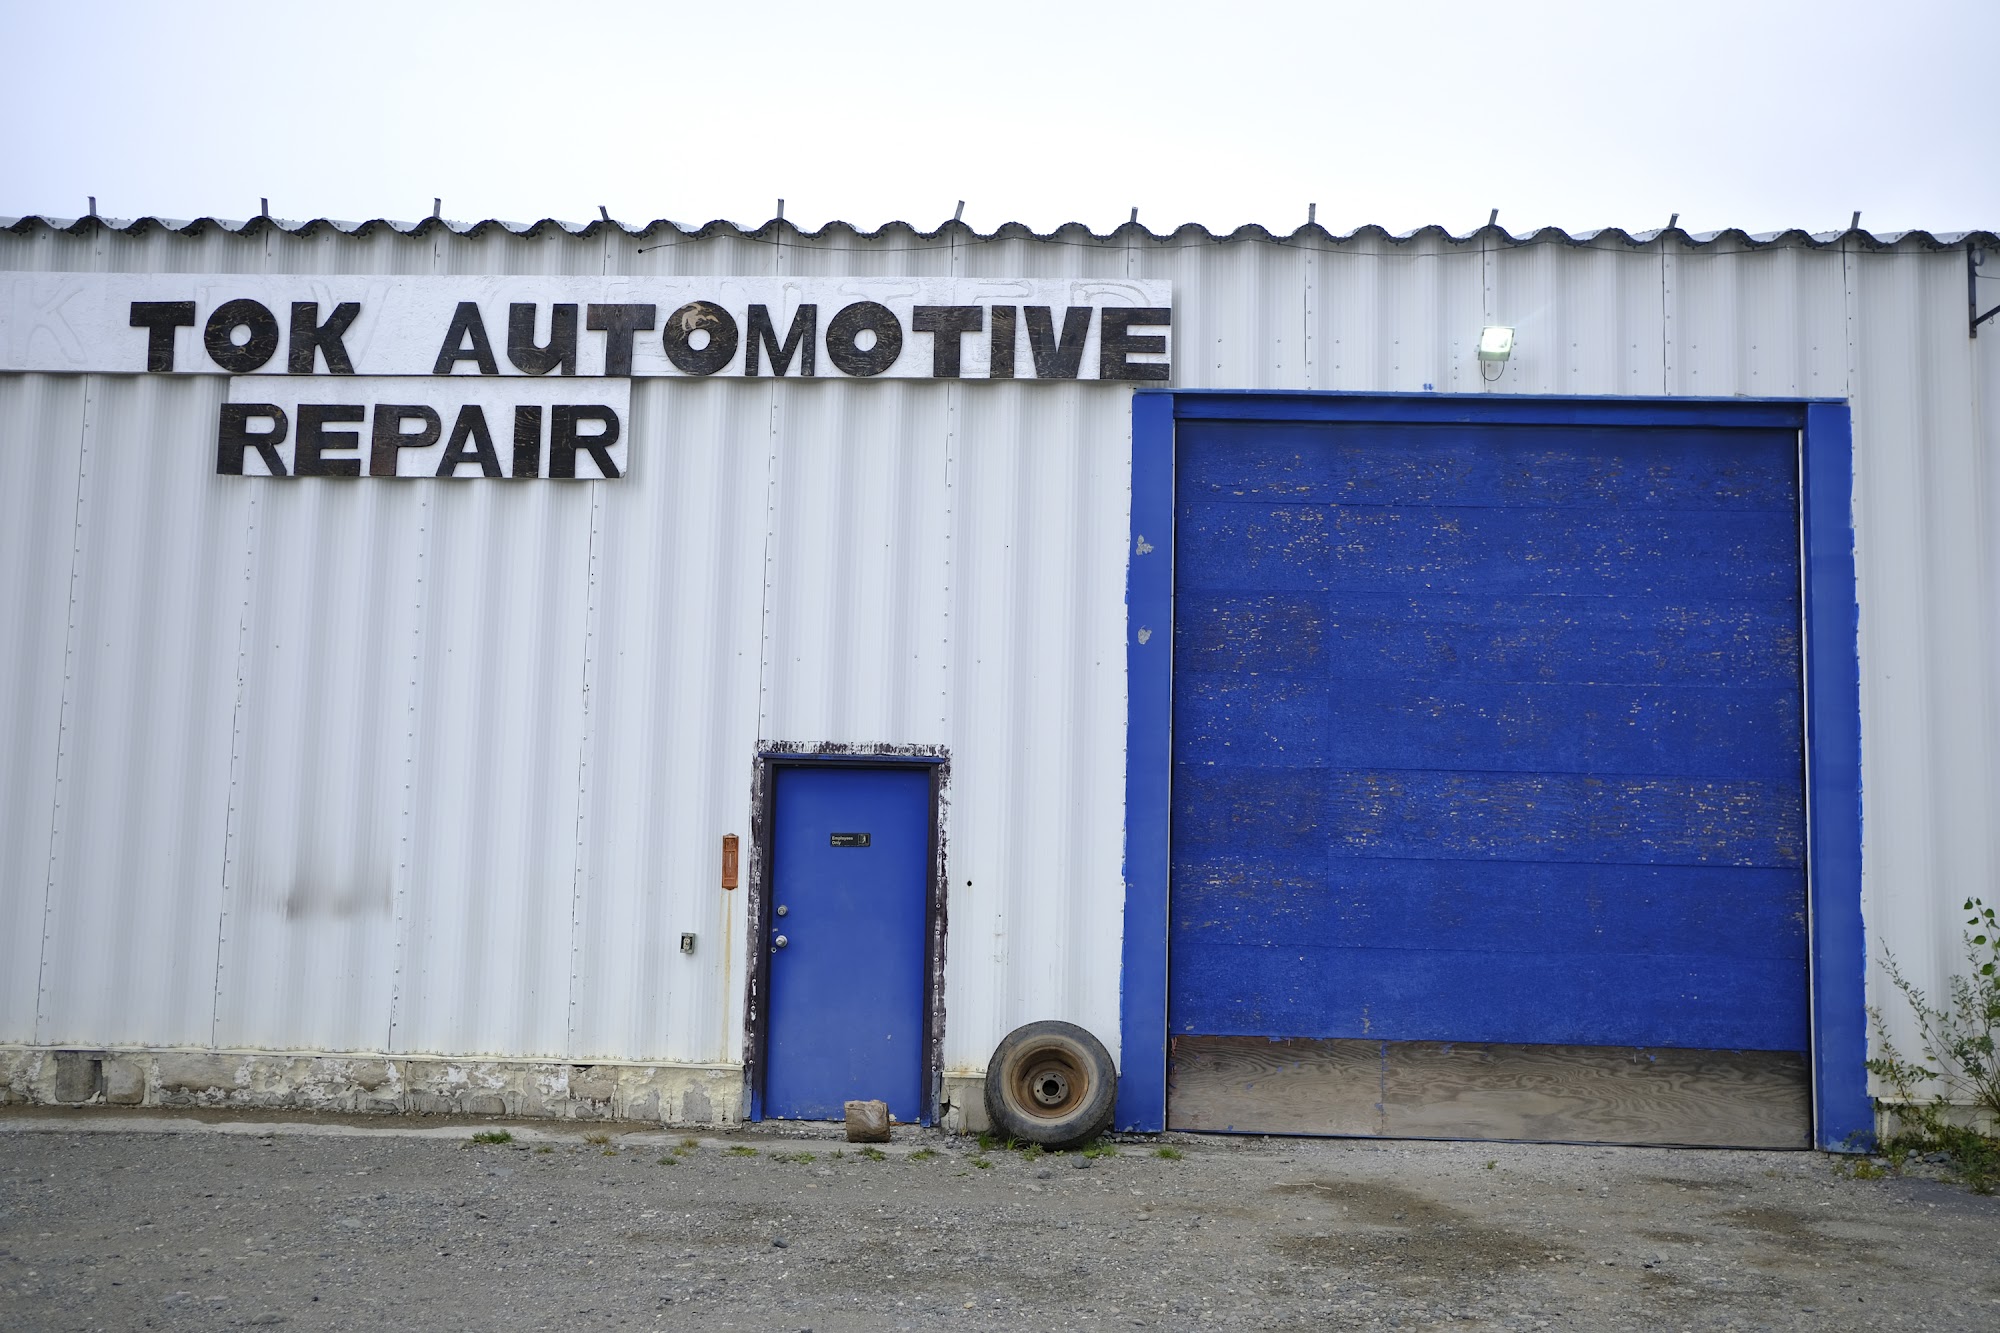 Tok Automotive Repair 1313 Alaska Hwy, Tok Alaska 99780